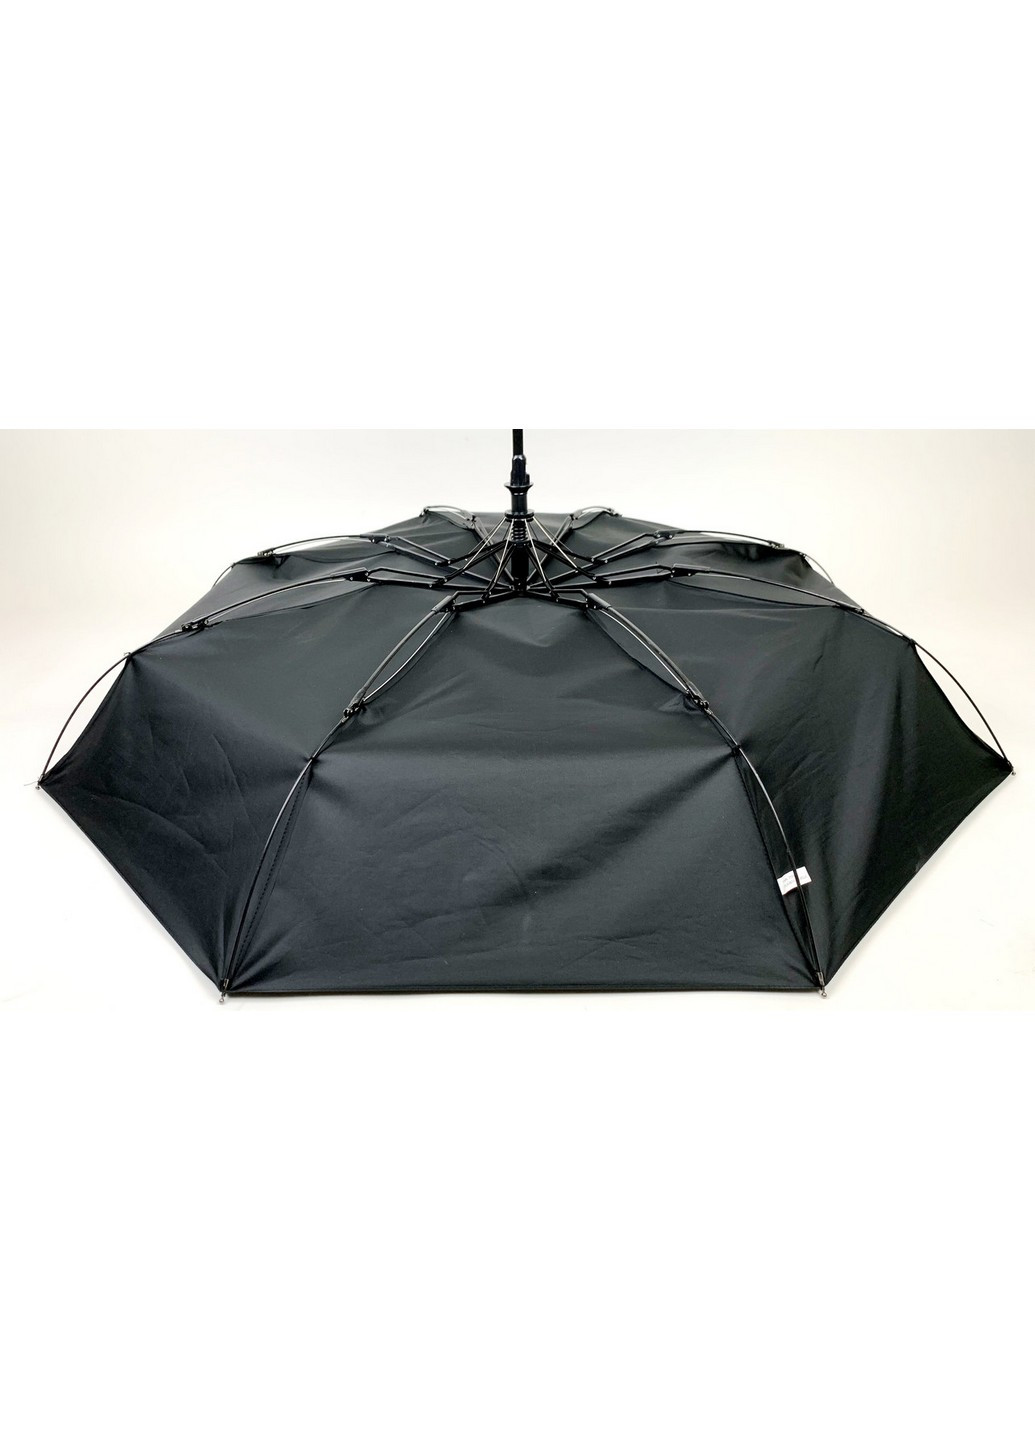 Зонт полуавтомат мужской 98 см Flagman (258676334)